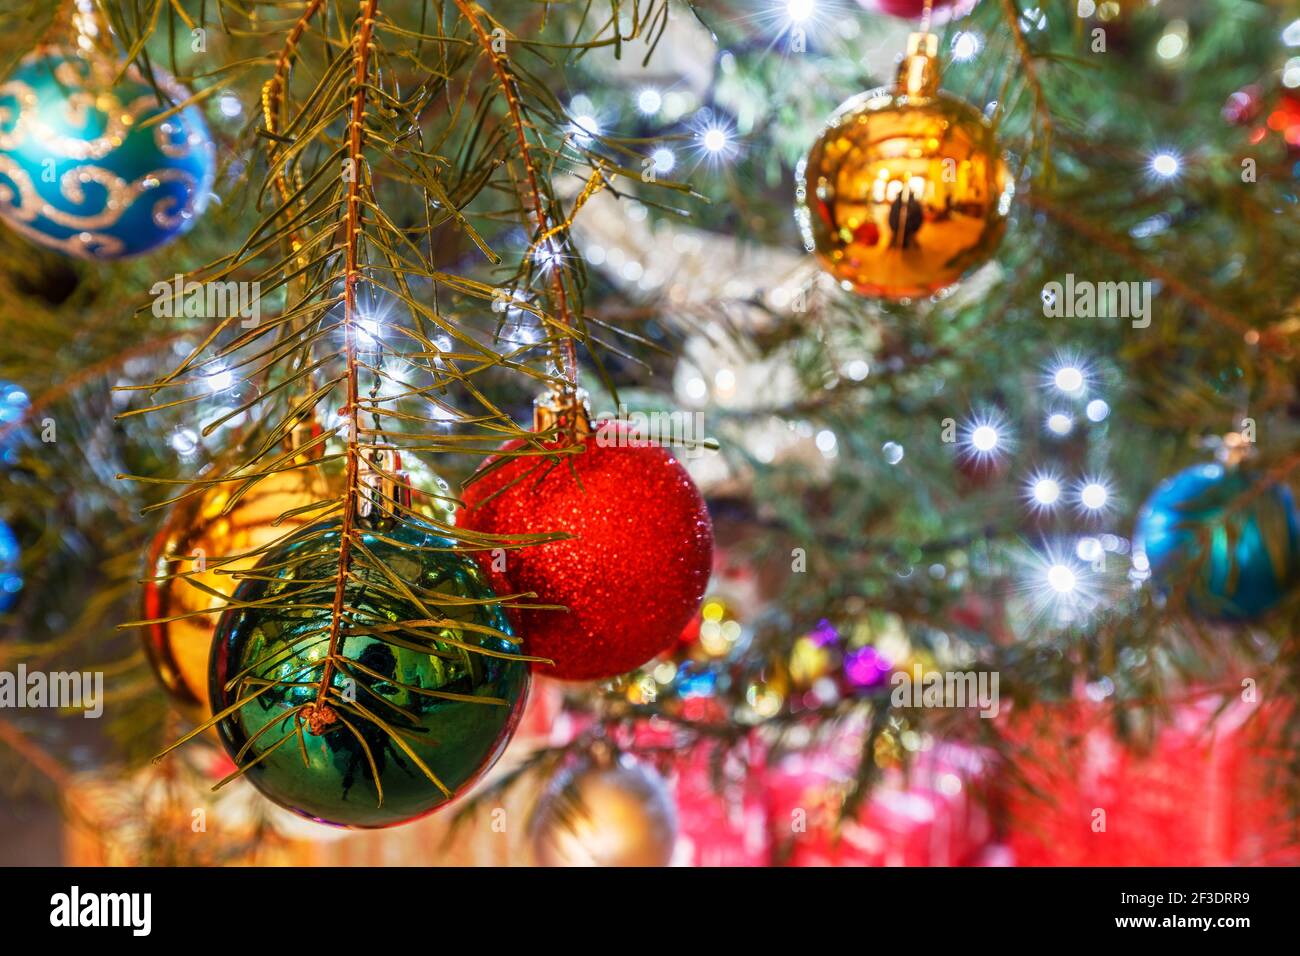 Seasonal Christmas decorations, coloured baubles on a Christmas tree. Stock Photo